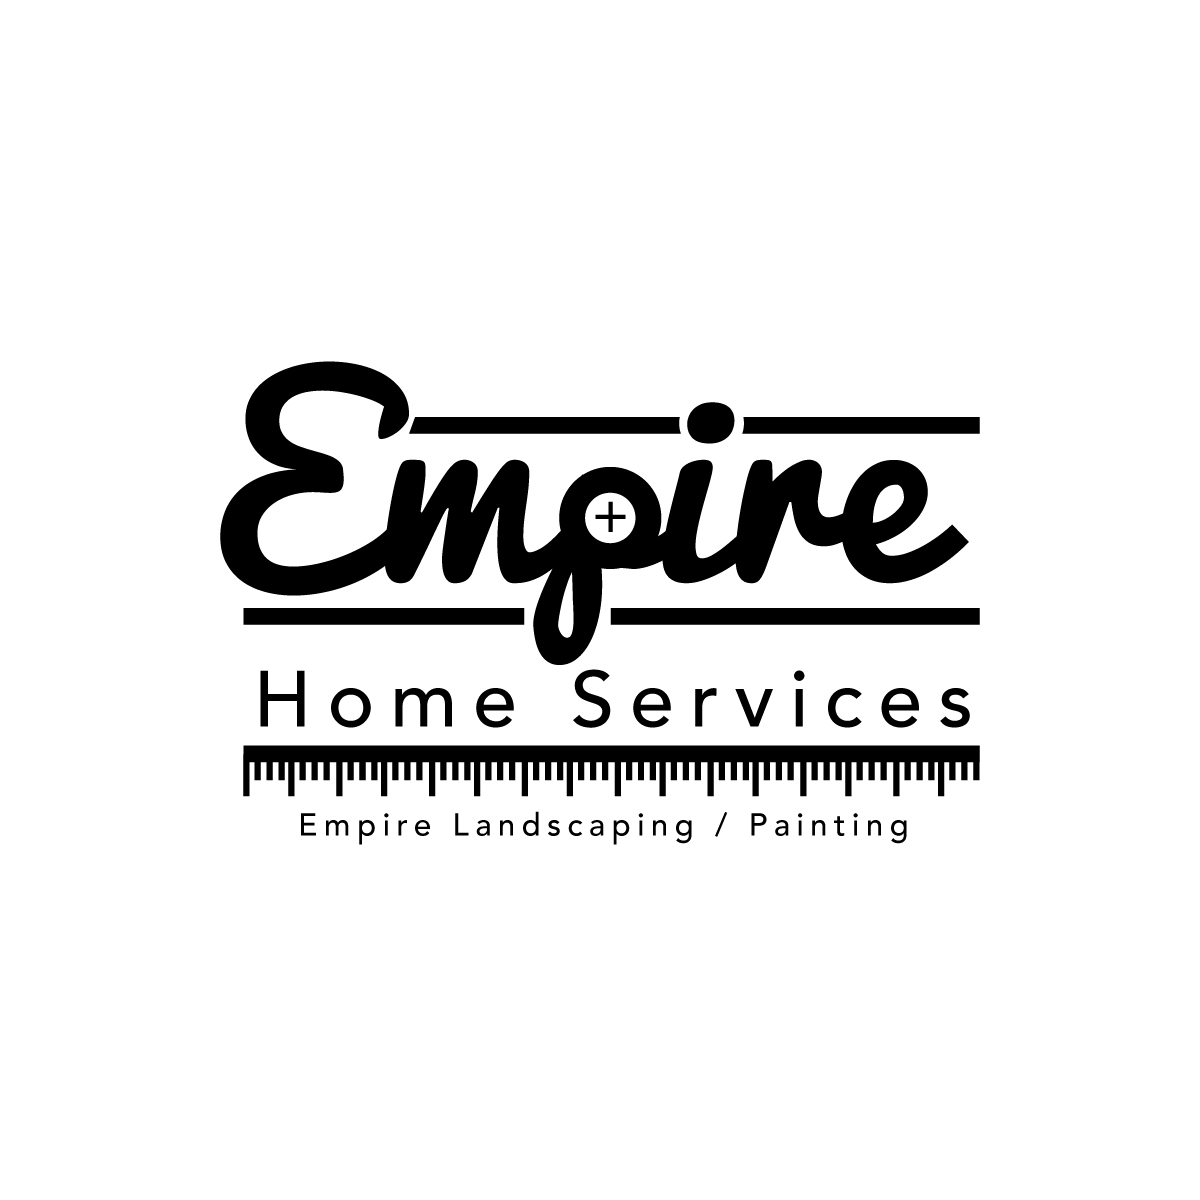 empire home services typographic logo